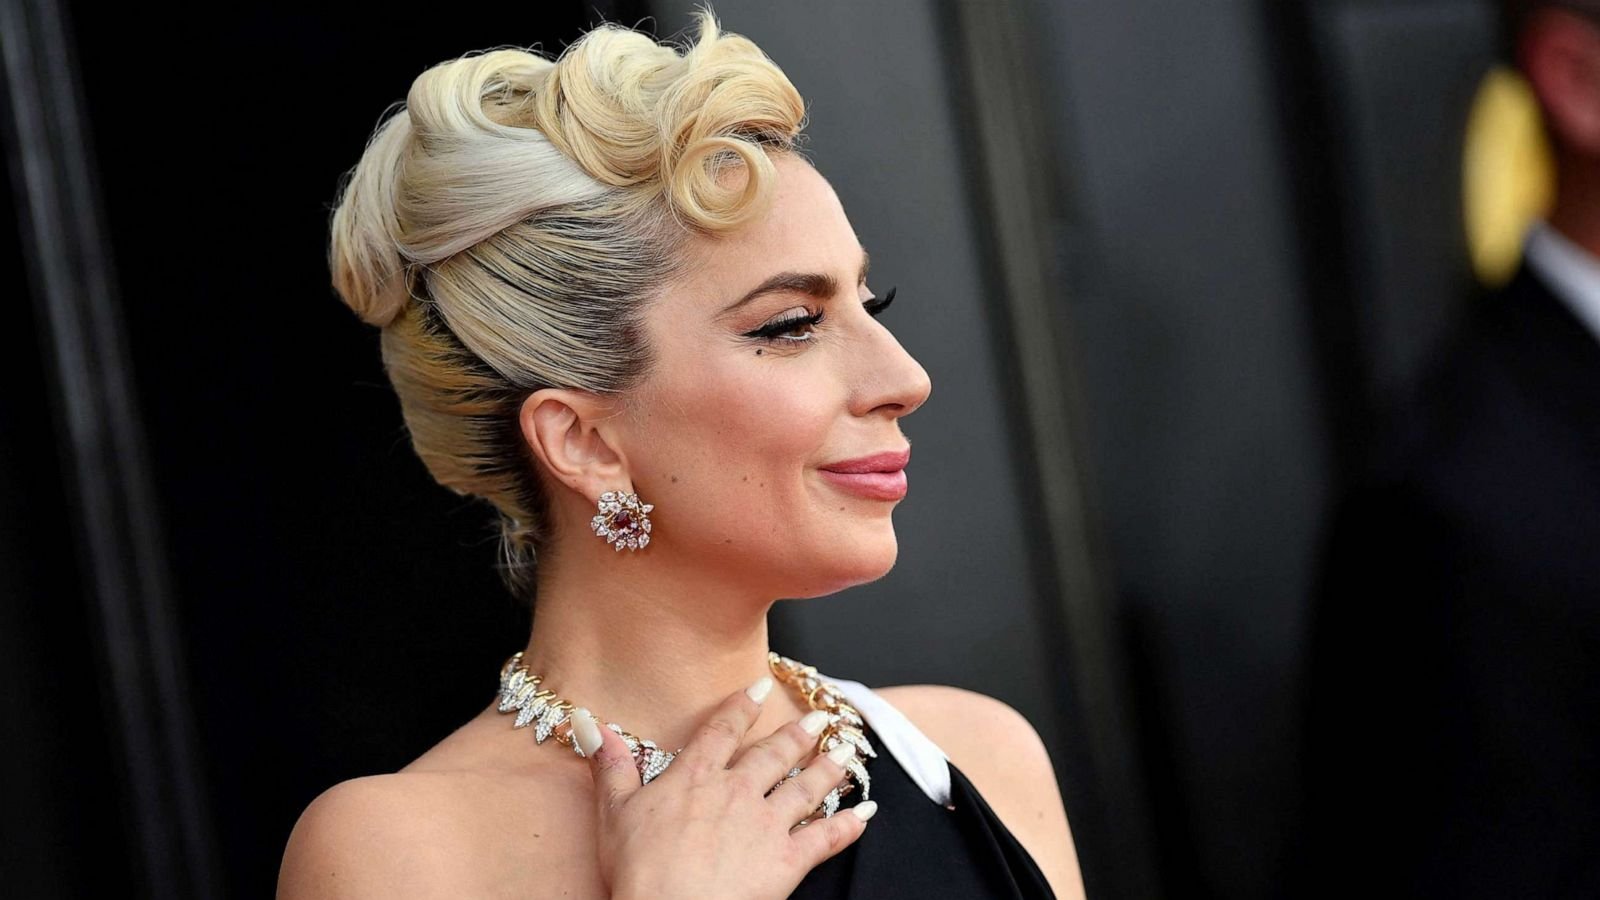 Lady Gaga's Fans Speculate Pregnancy Amid Split Rumors with Michael Polansky